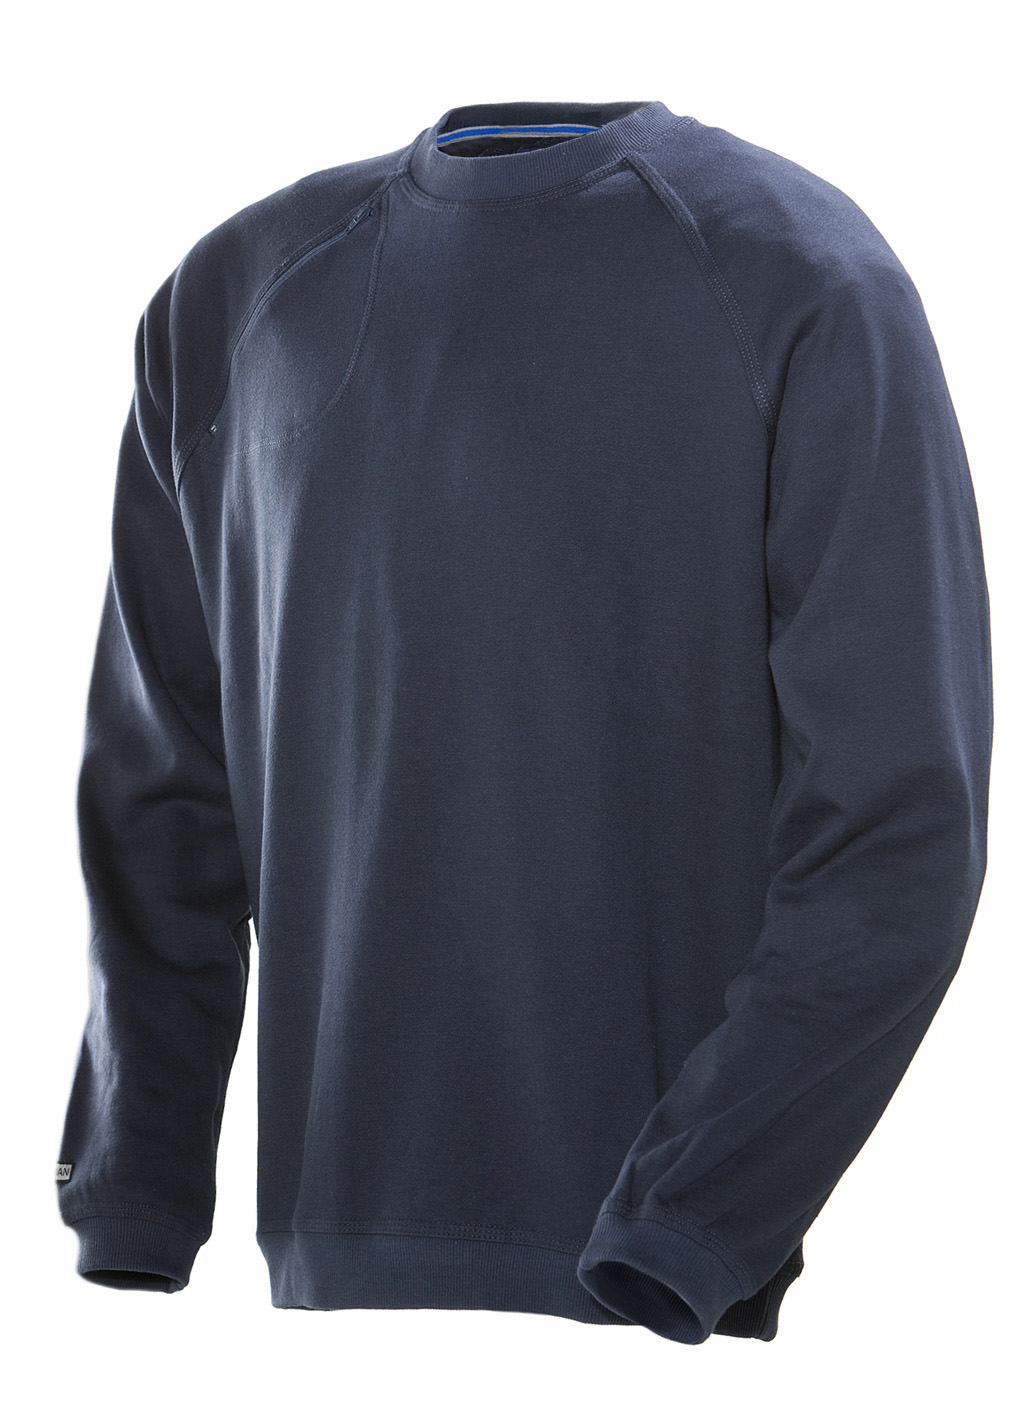 5122 Sweatshirt 3XL bleu marine